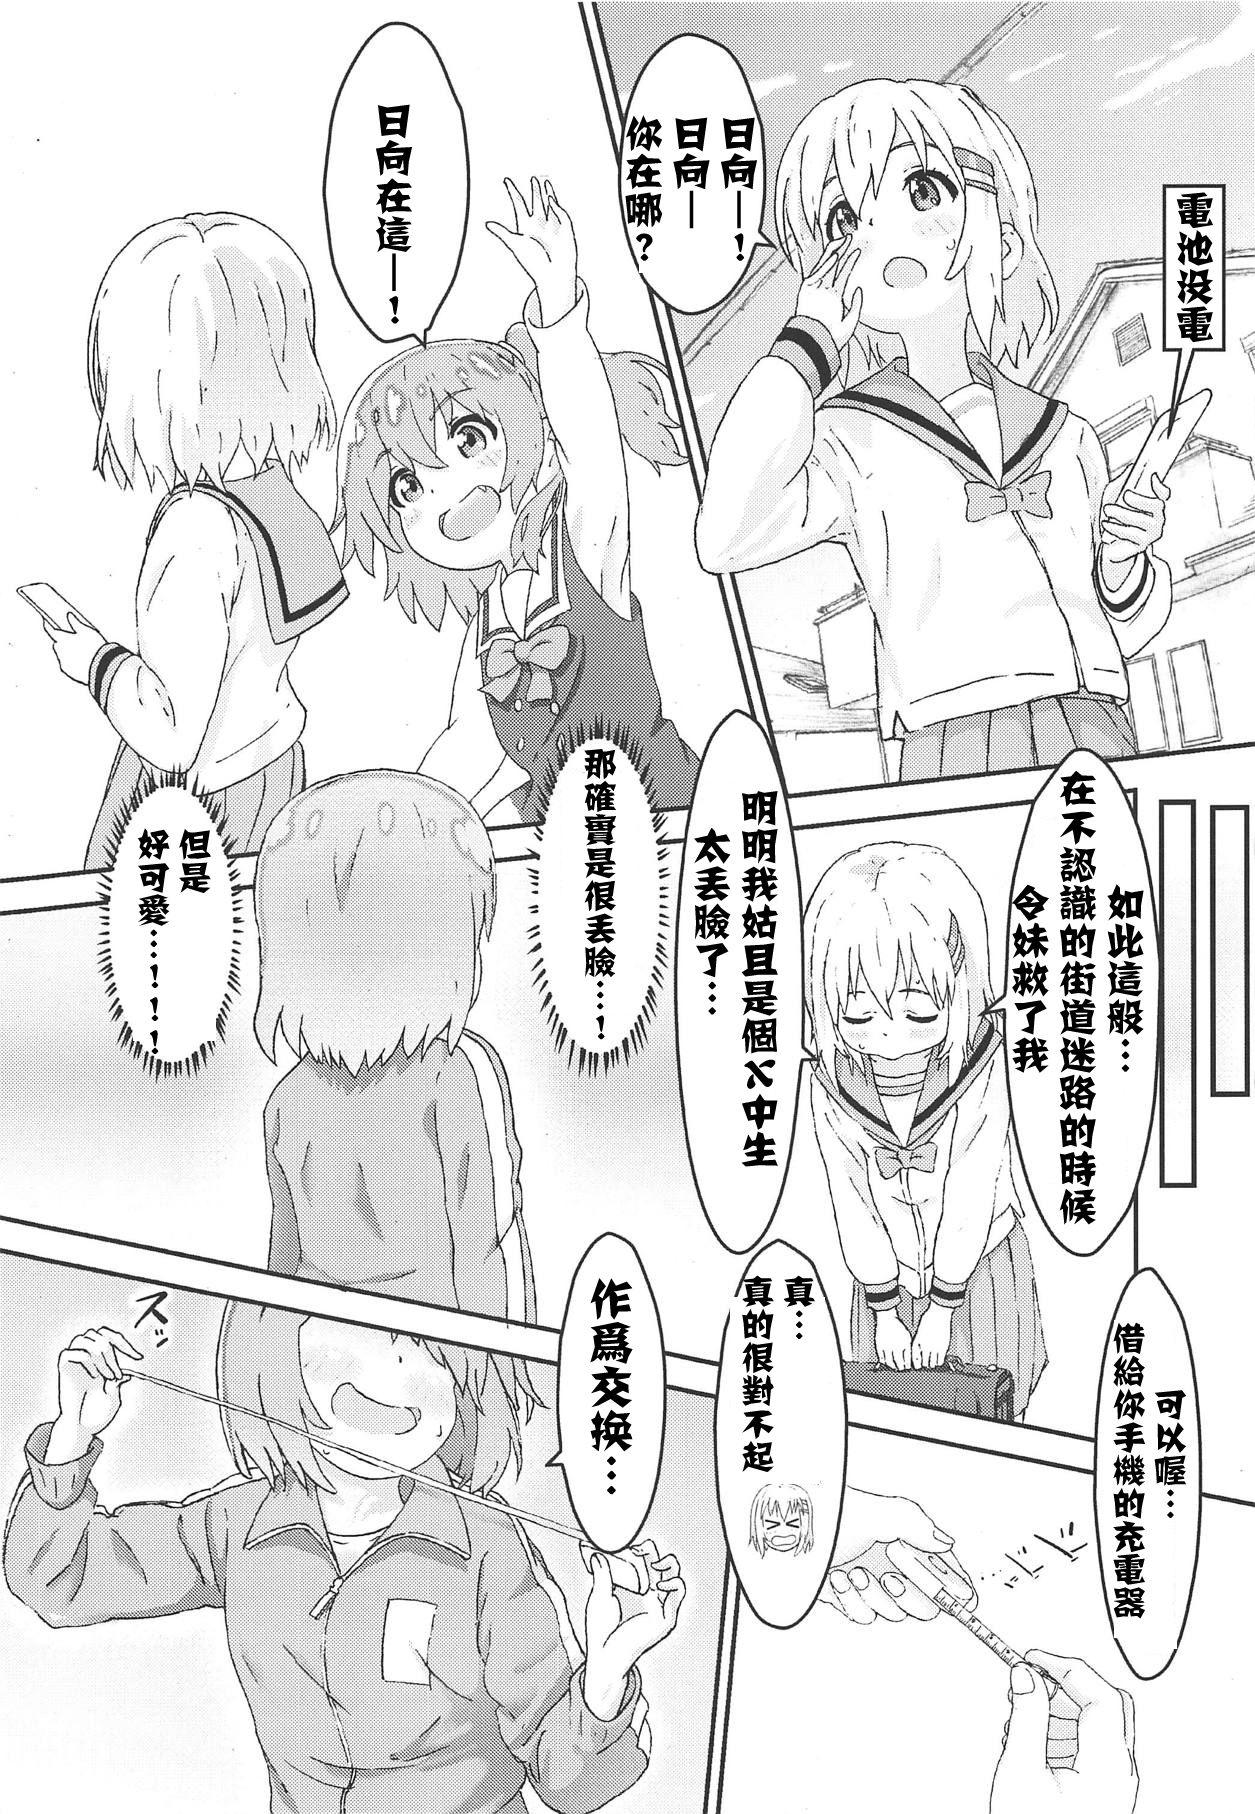 Female Watashi ni Yama Susume Shoujo ga Maiorita! - Watashi ni tenshi ga maiorita Yama no susume Classroom - Page 5